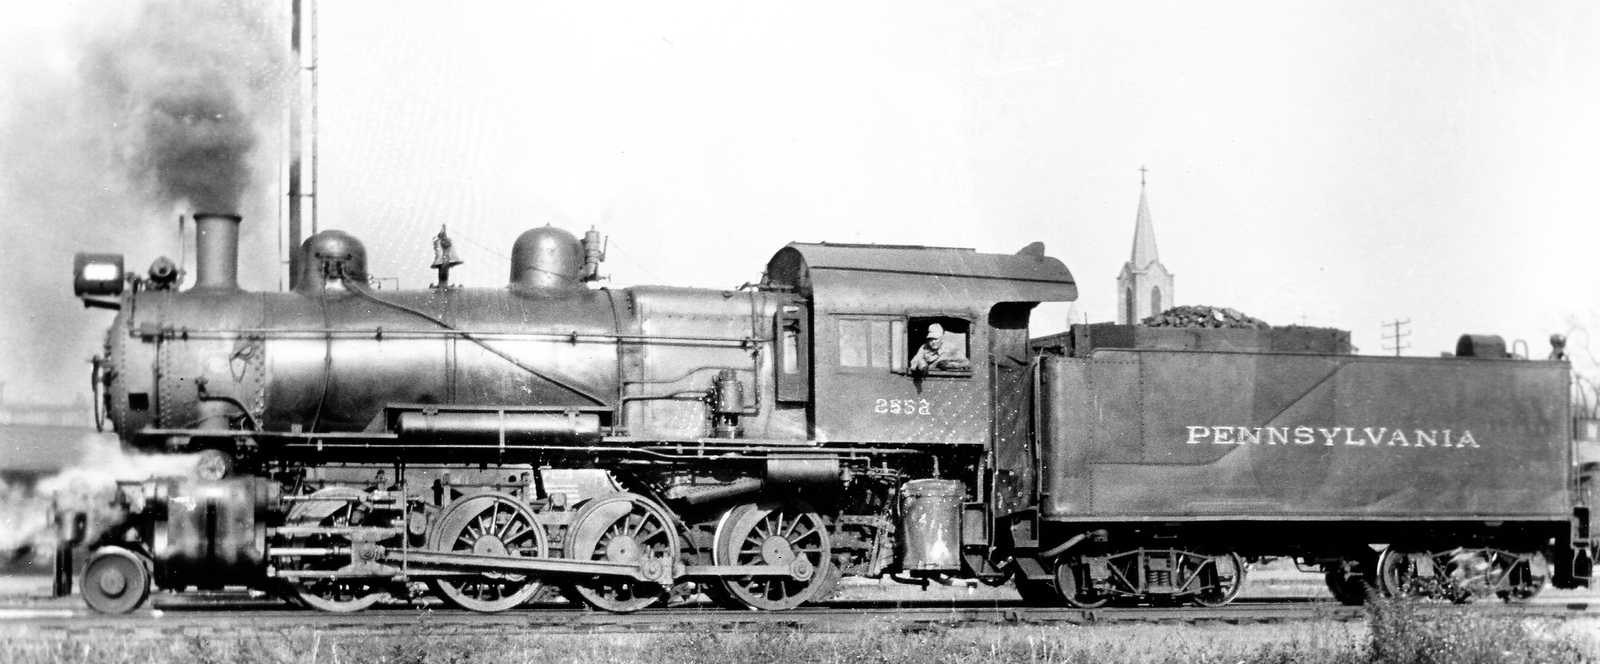 H6sa No. 2552 in November 1931 in Logansport, Indiana